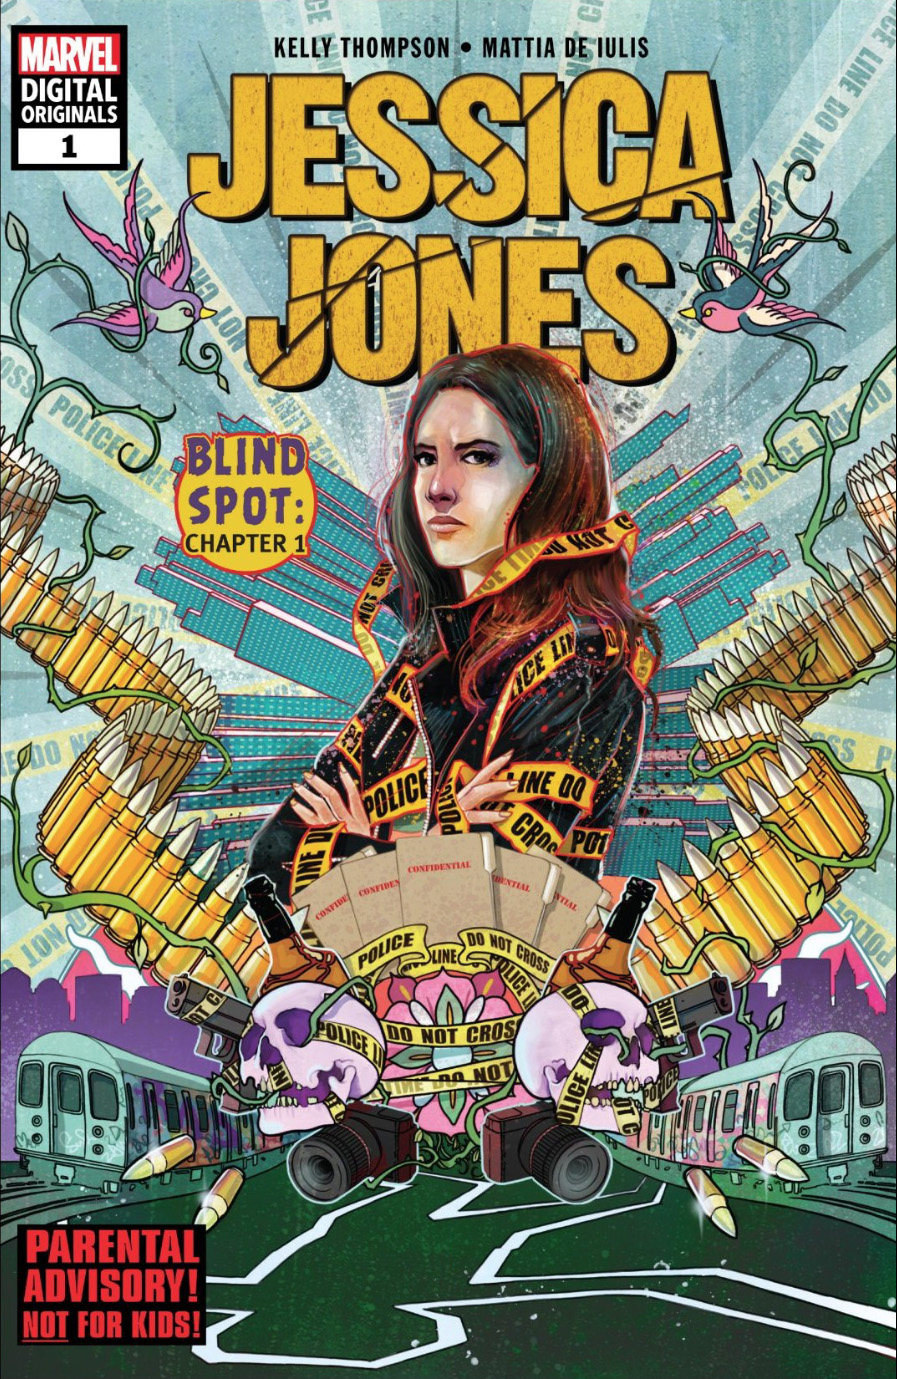 Jessica Jones #1 (Marvel Digital Originals) review: Jessica's in good hands with this new creative team